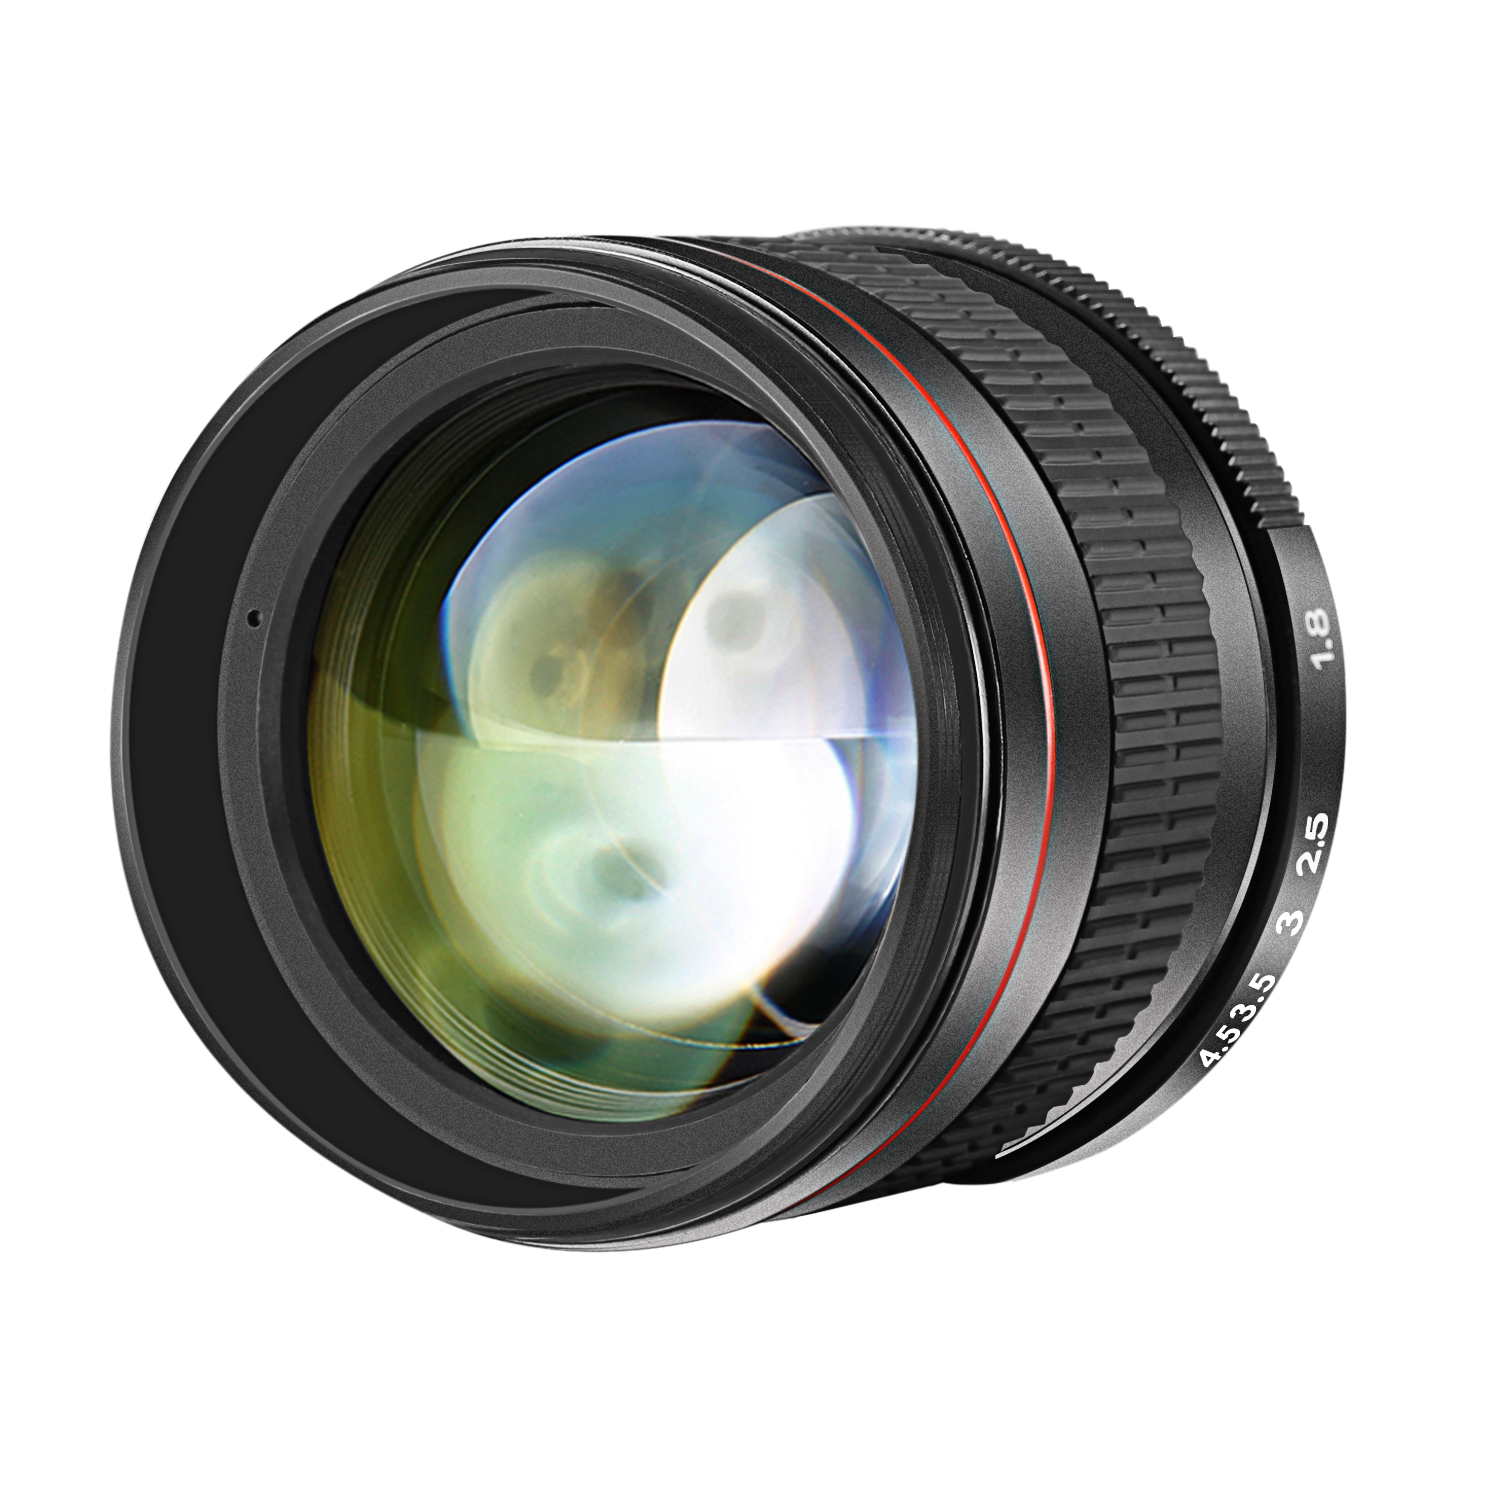 Neewer 85mm f/1.8 Manual Focus Medium Telephoto Lens for APS-C DSLR Nikon D5 D4s | eBay